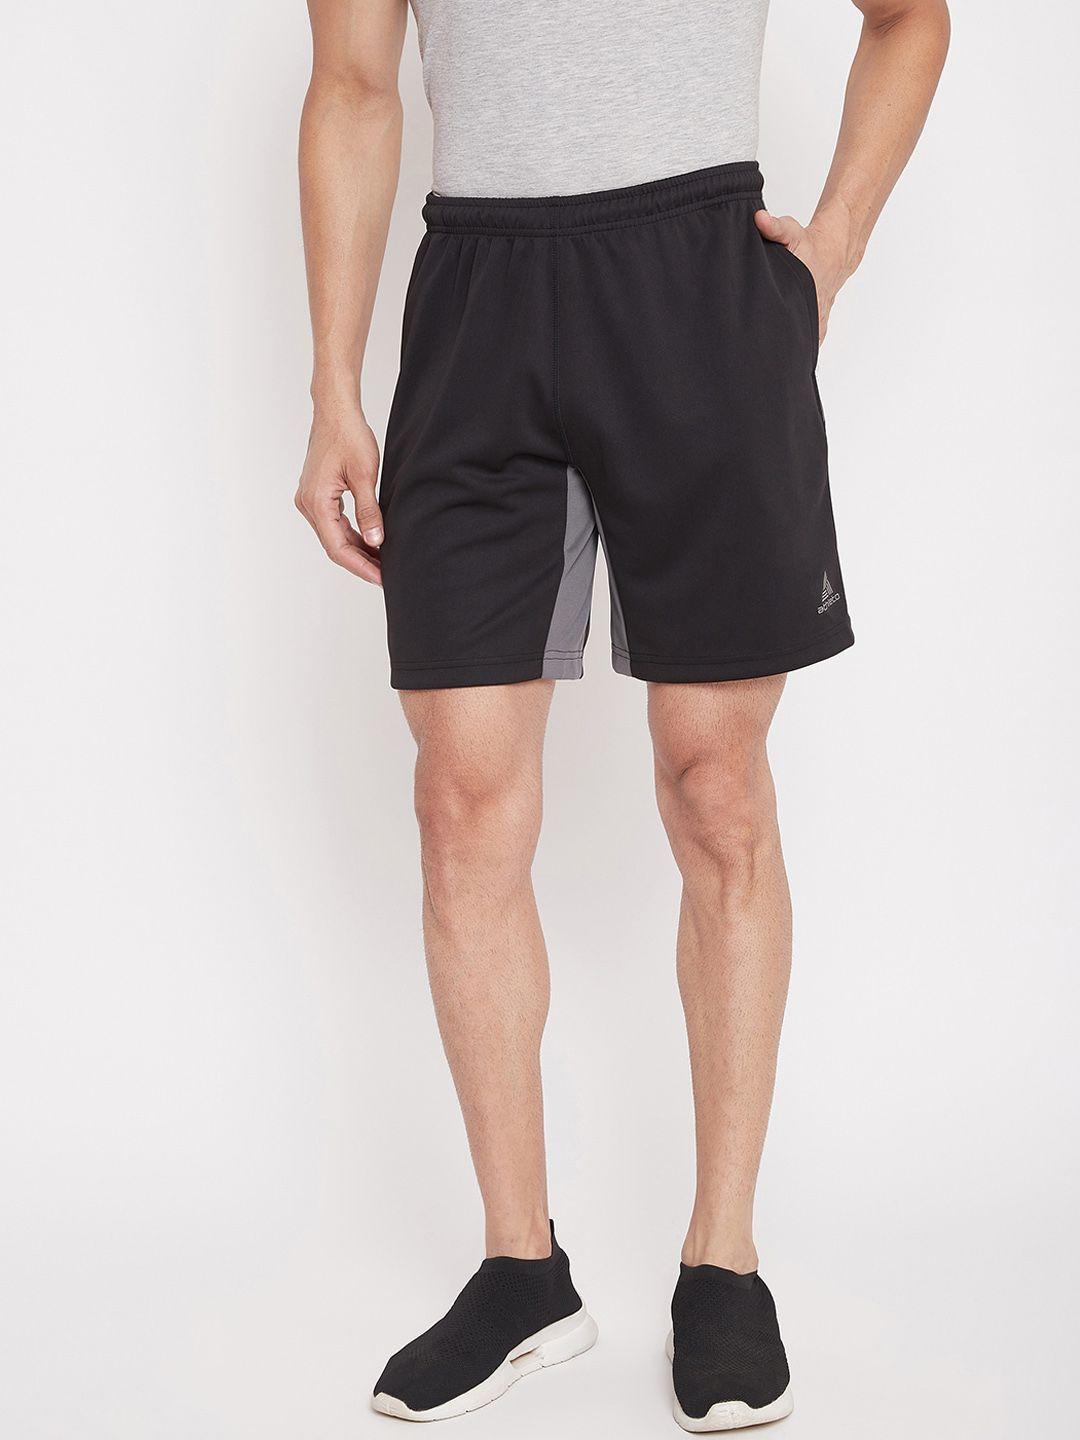 athlisis men black colourblocked sports shorts